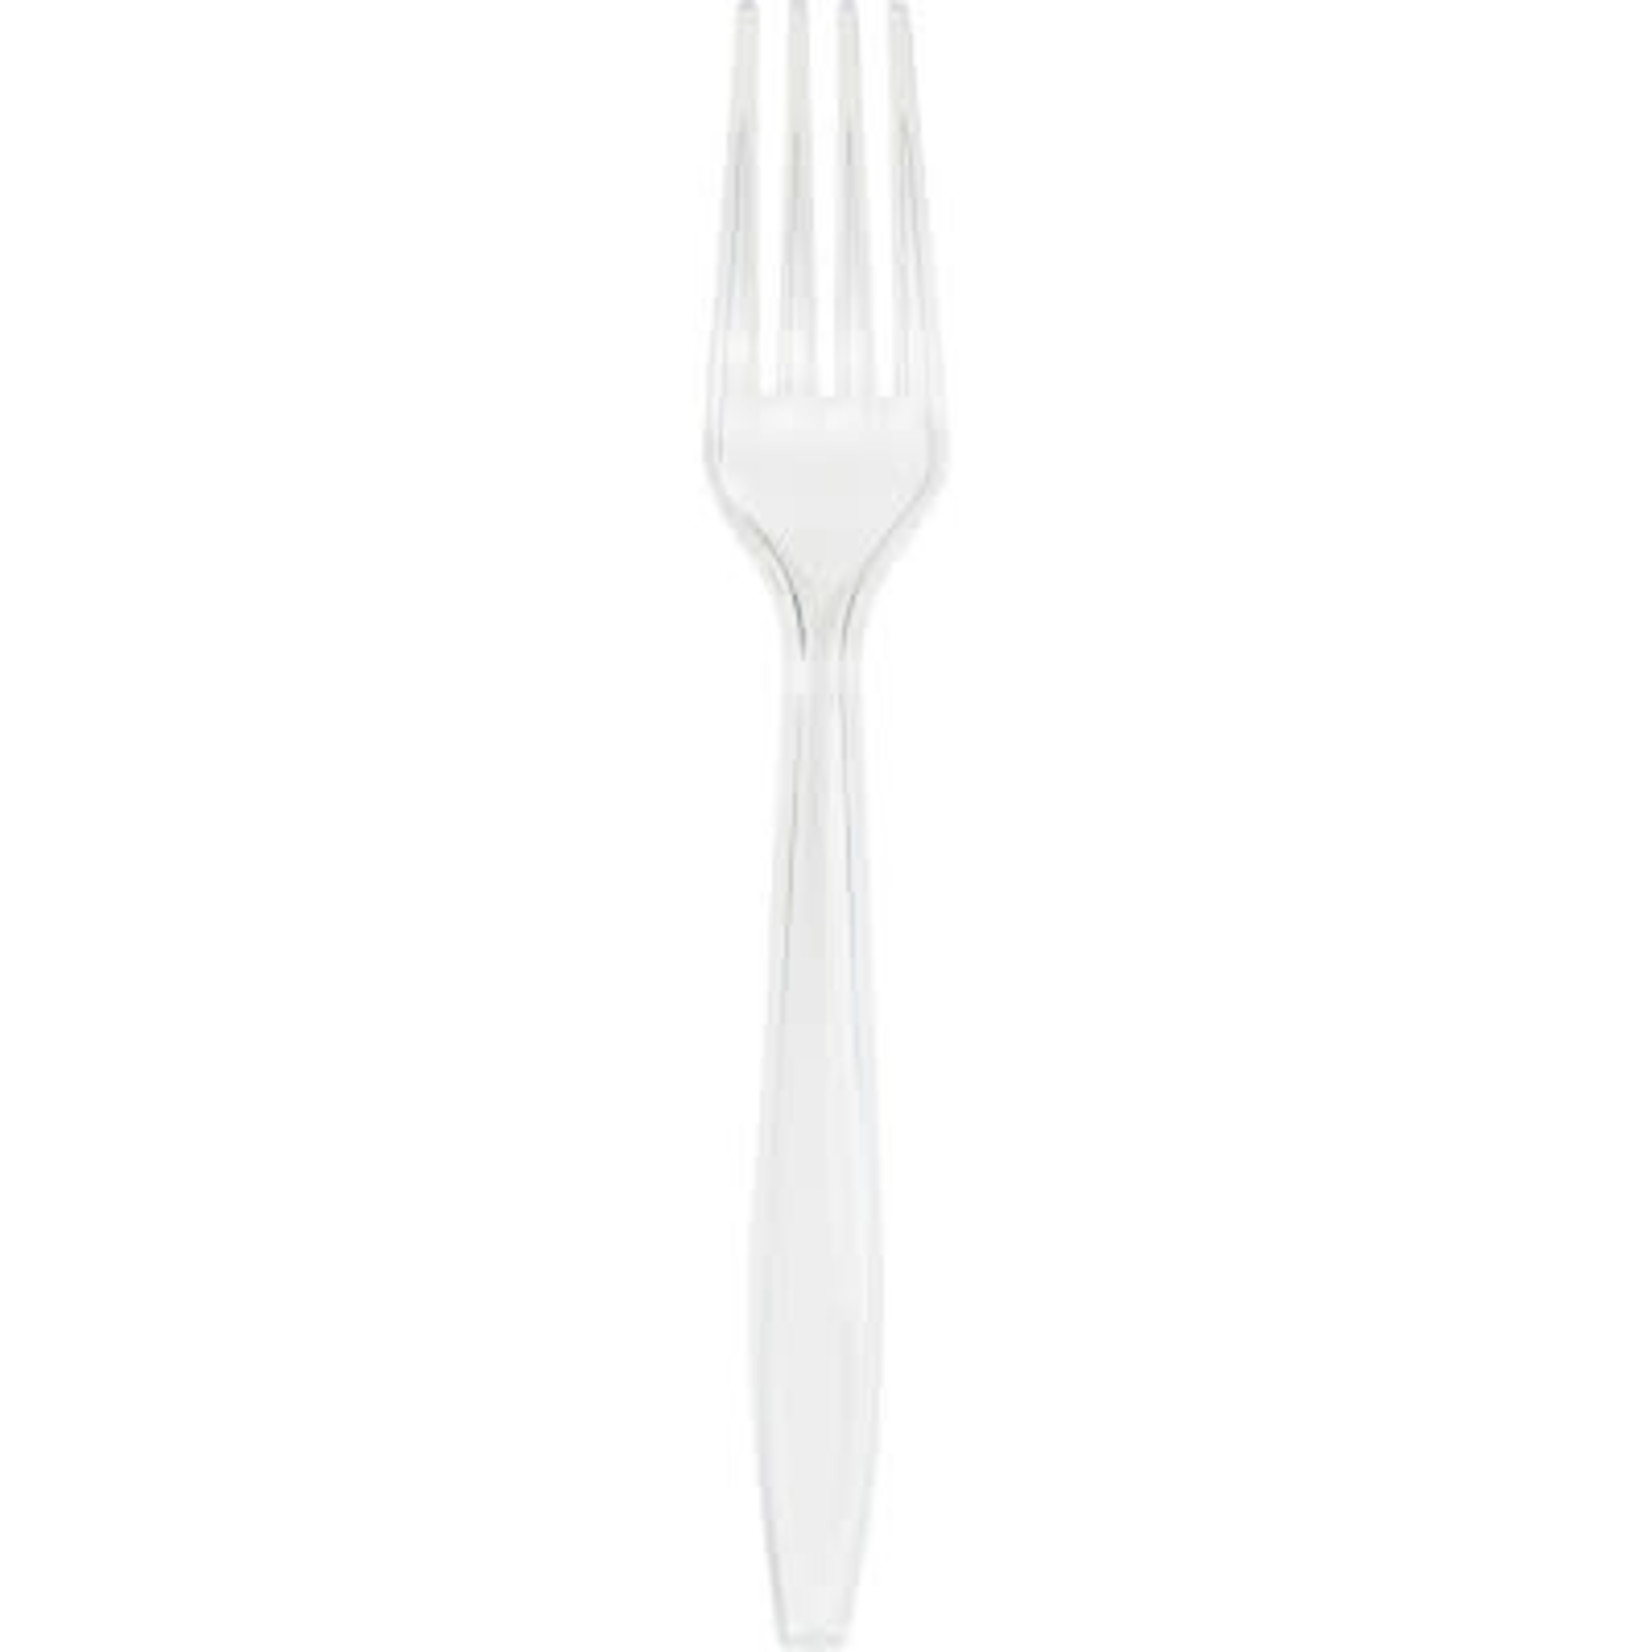 Creative Converting Clear Premium Plastic Forks - 50ct.